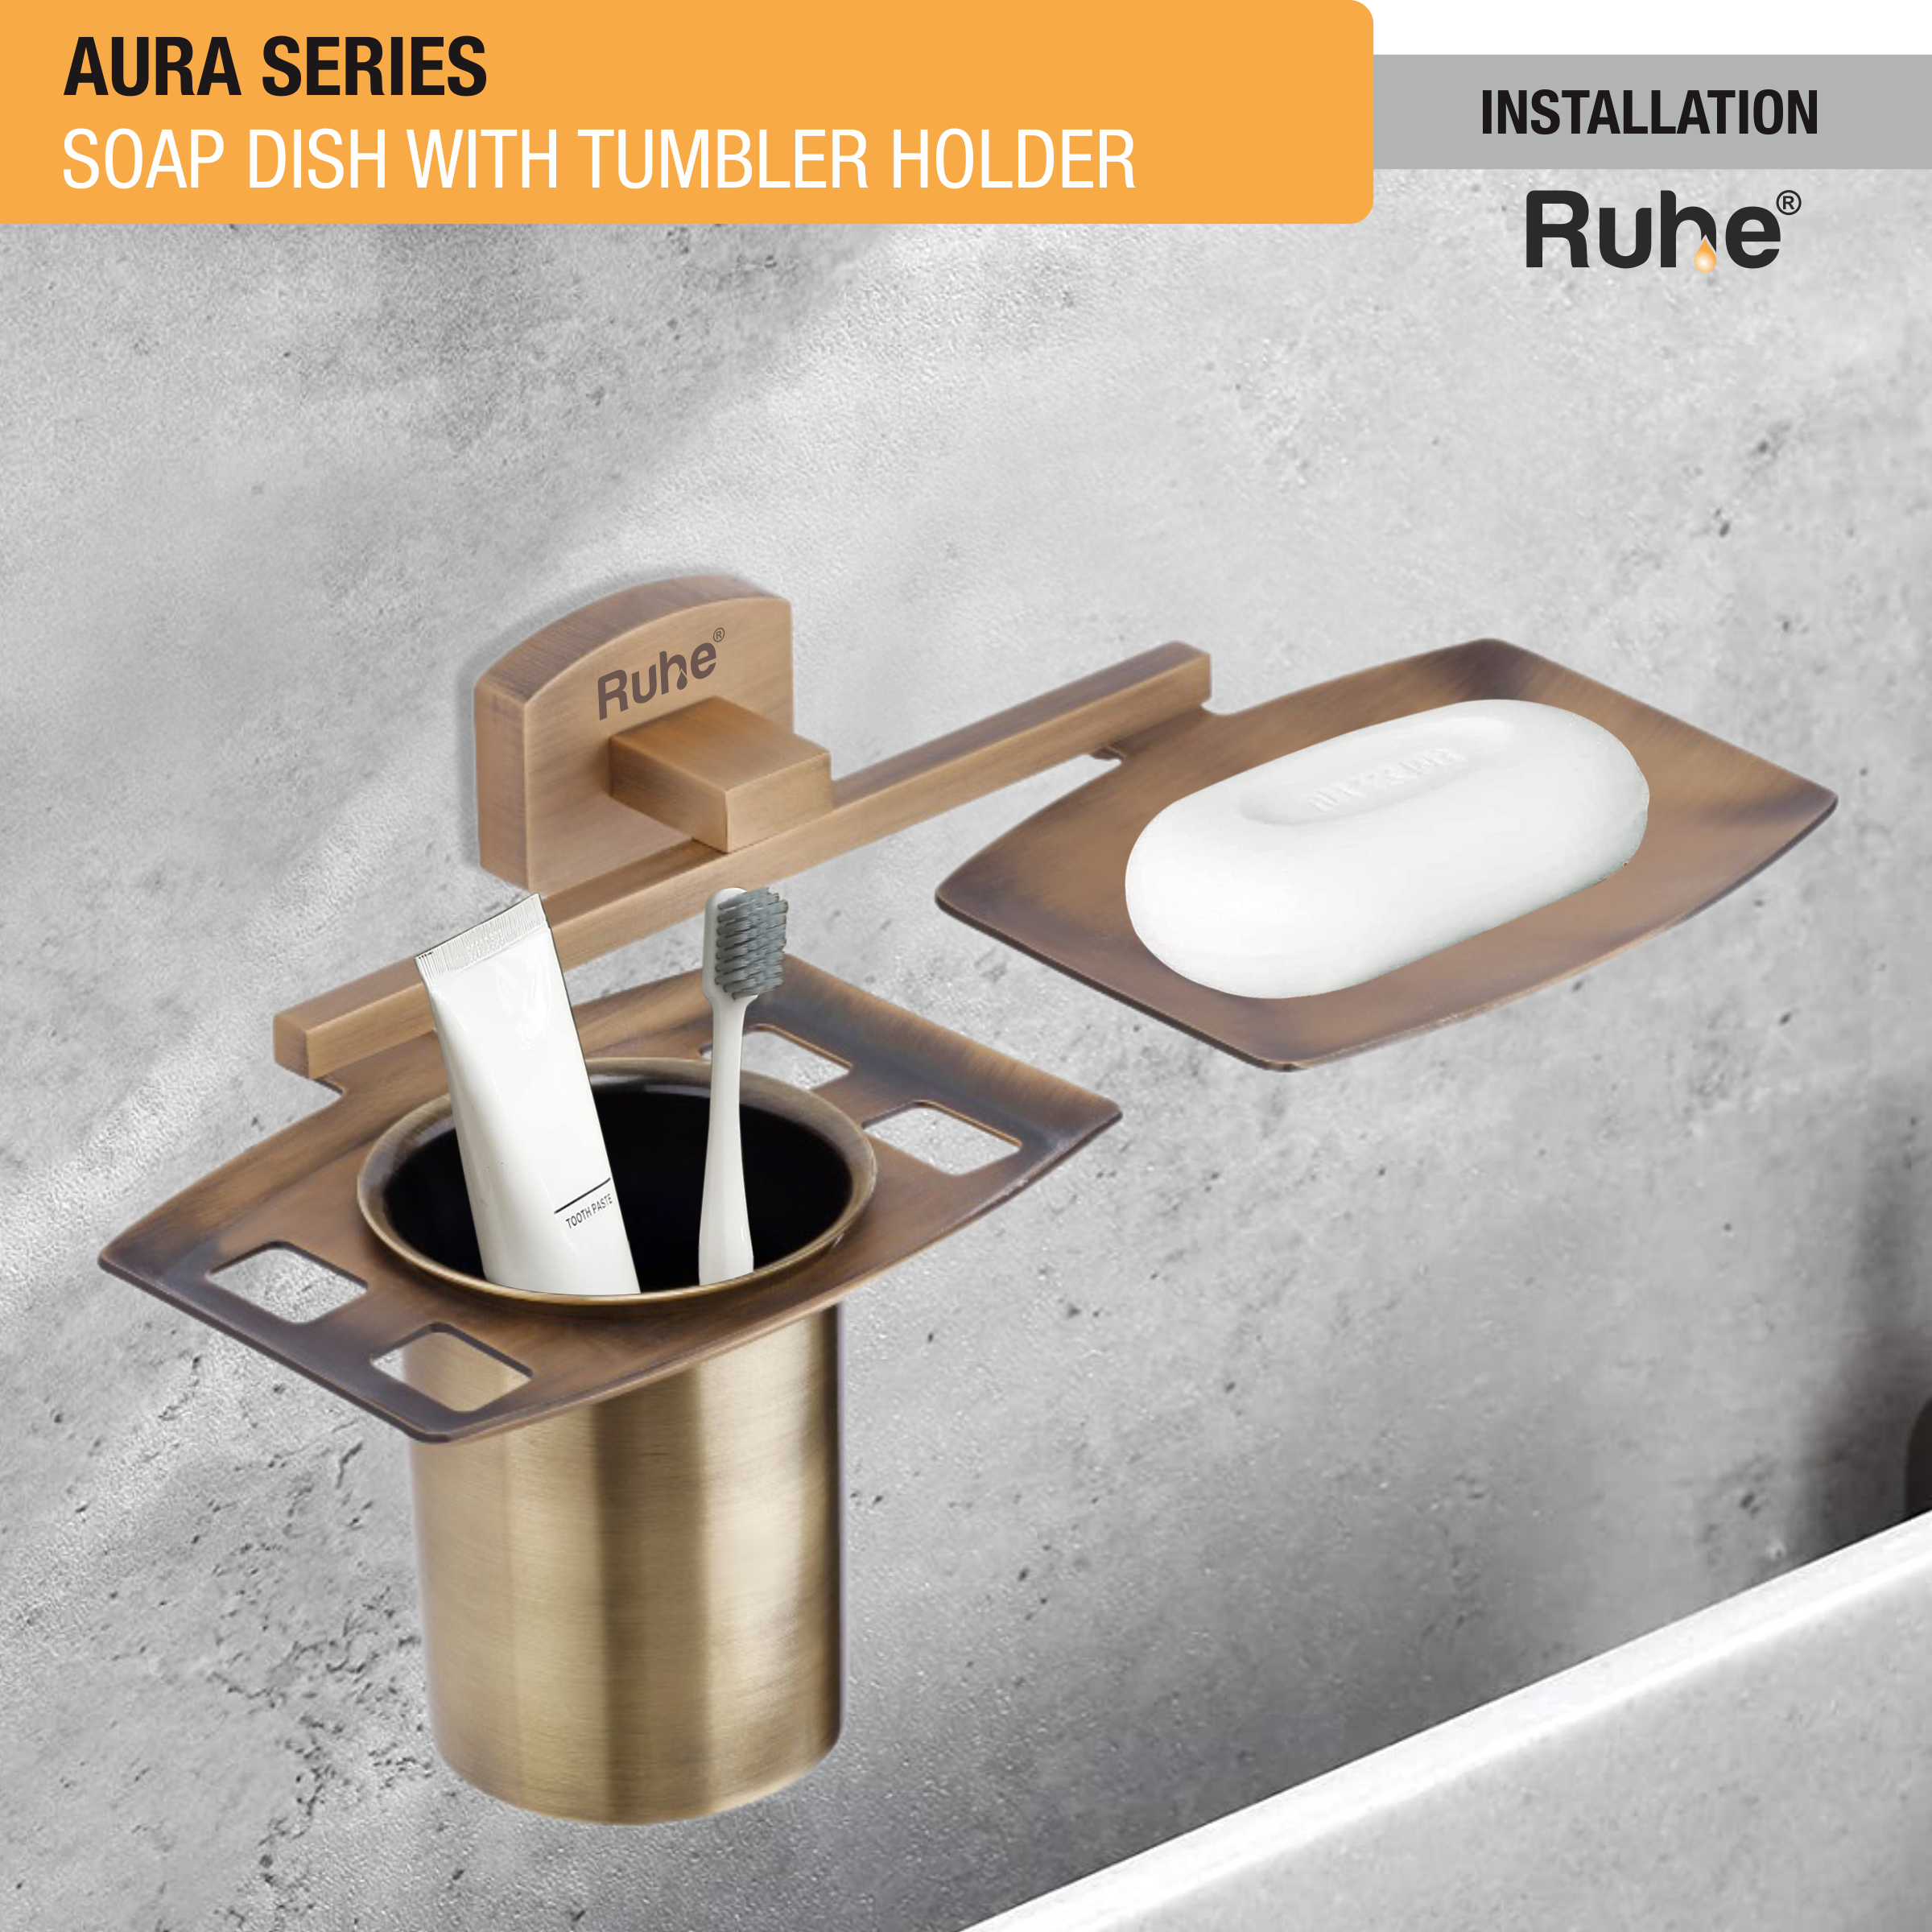 Aura Brass Soap Dish with Tumbler Holder installation